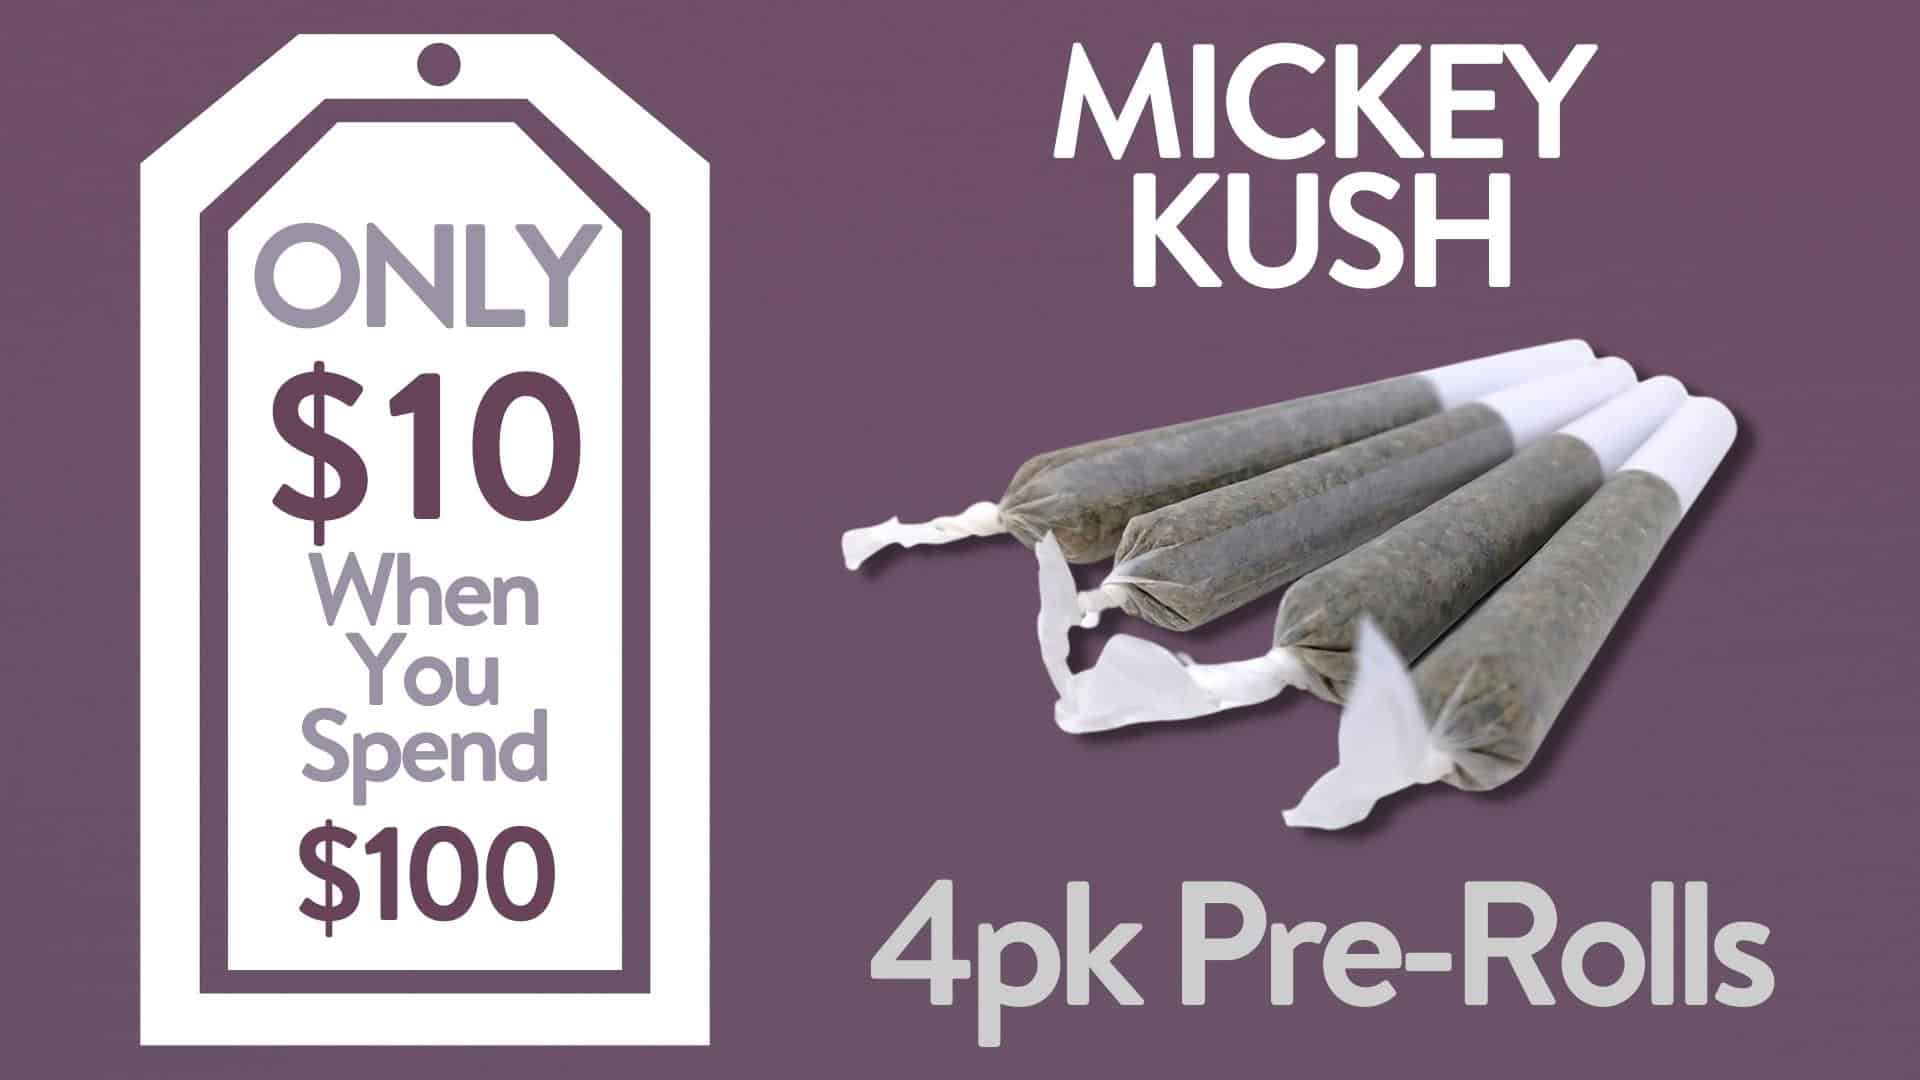 Mickey Kush $10 4pk Deal